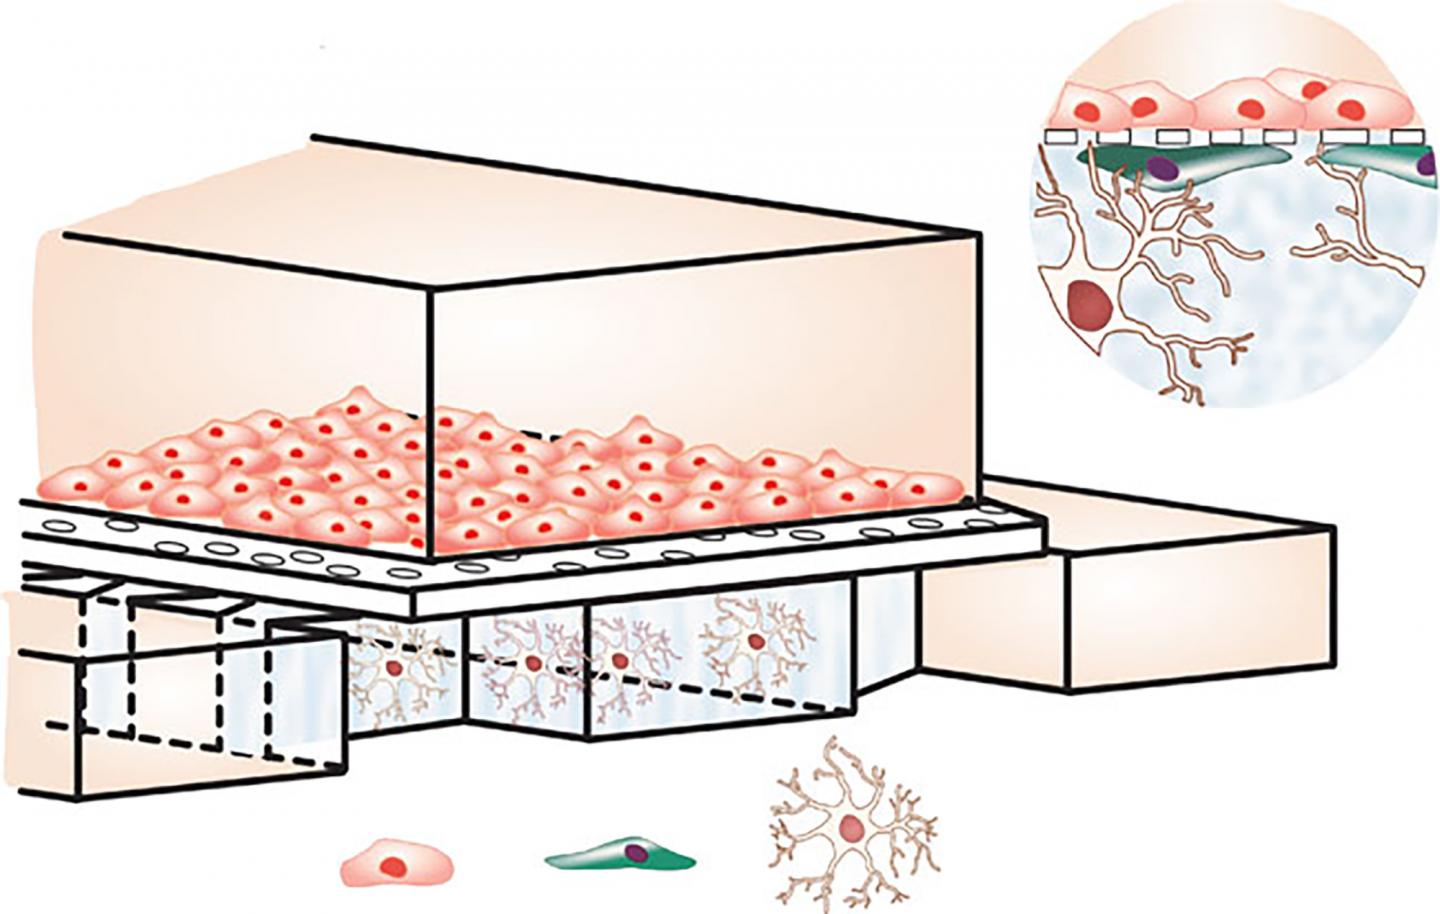 Blood-Brain Barrier on a Chip Illustration